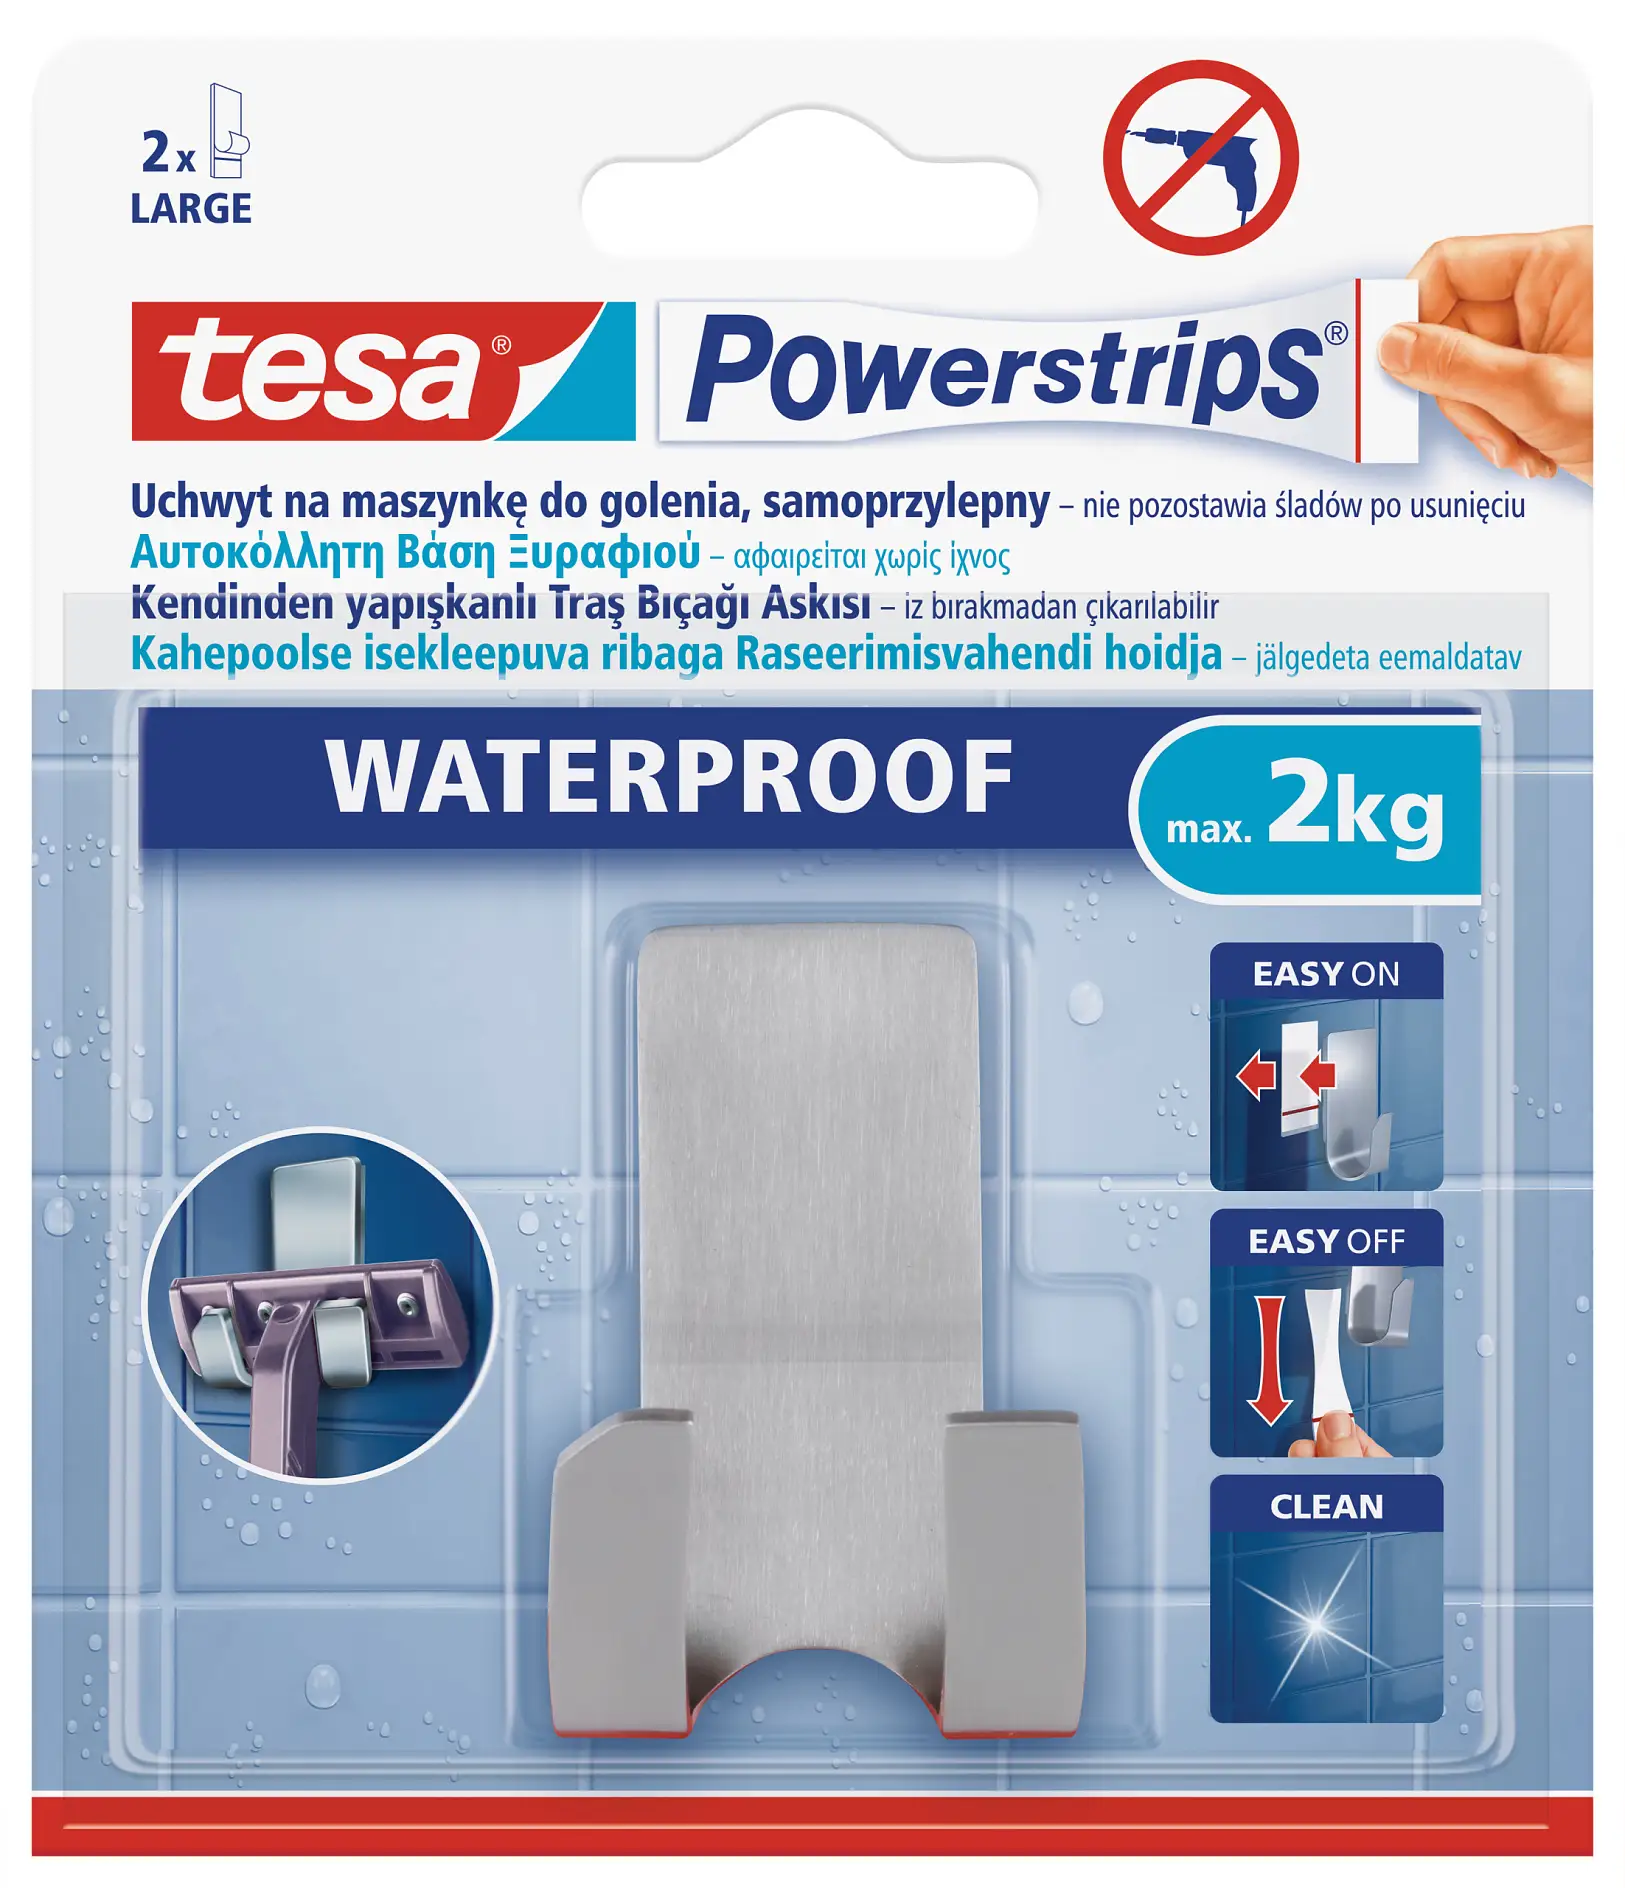 tesa Powerstrips waterproof razor holder zoom